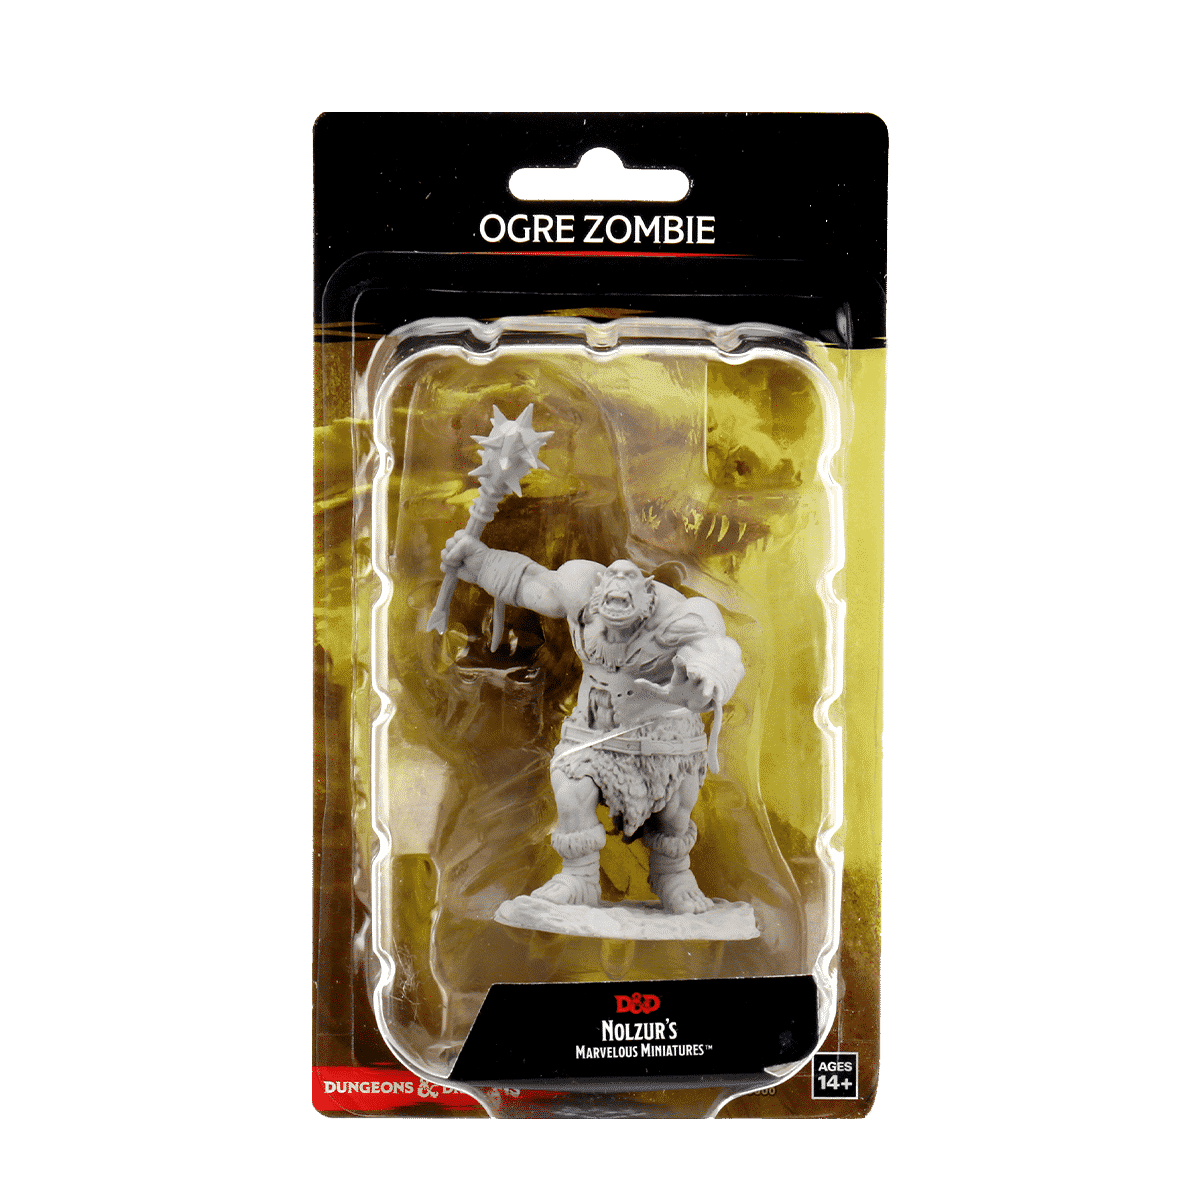 D&D Monster - Ogre Zombie